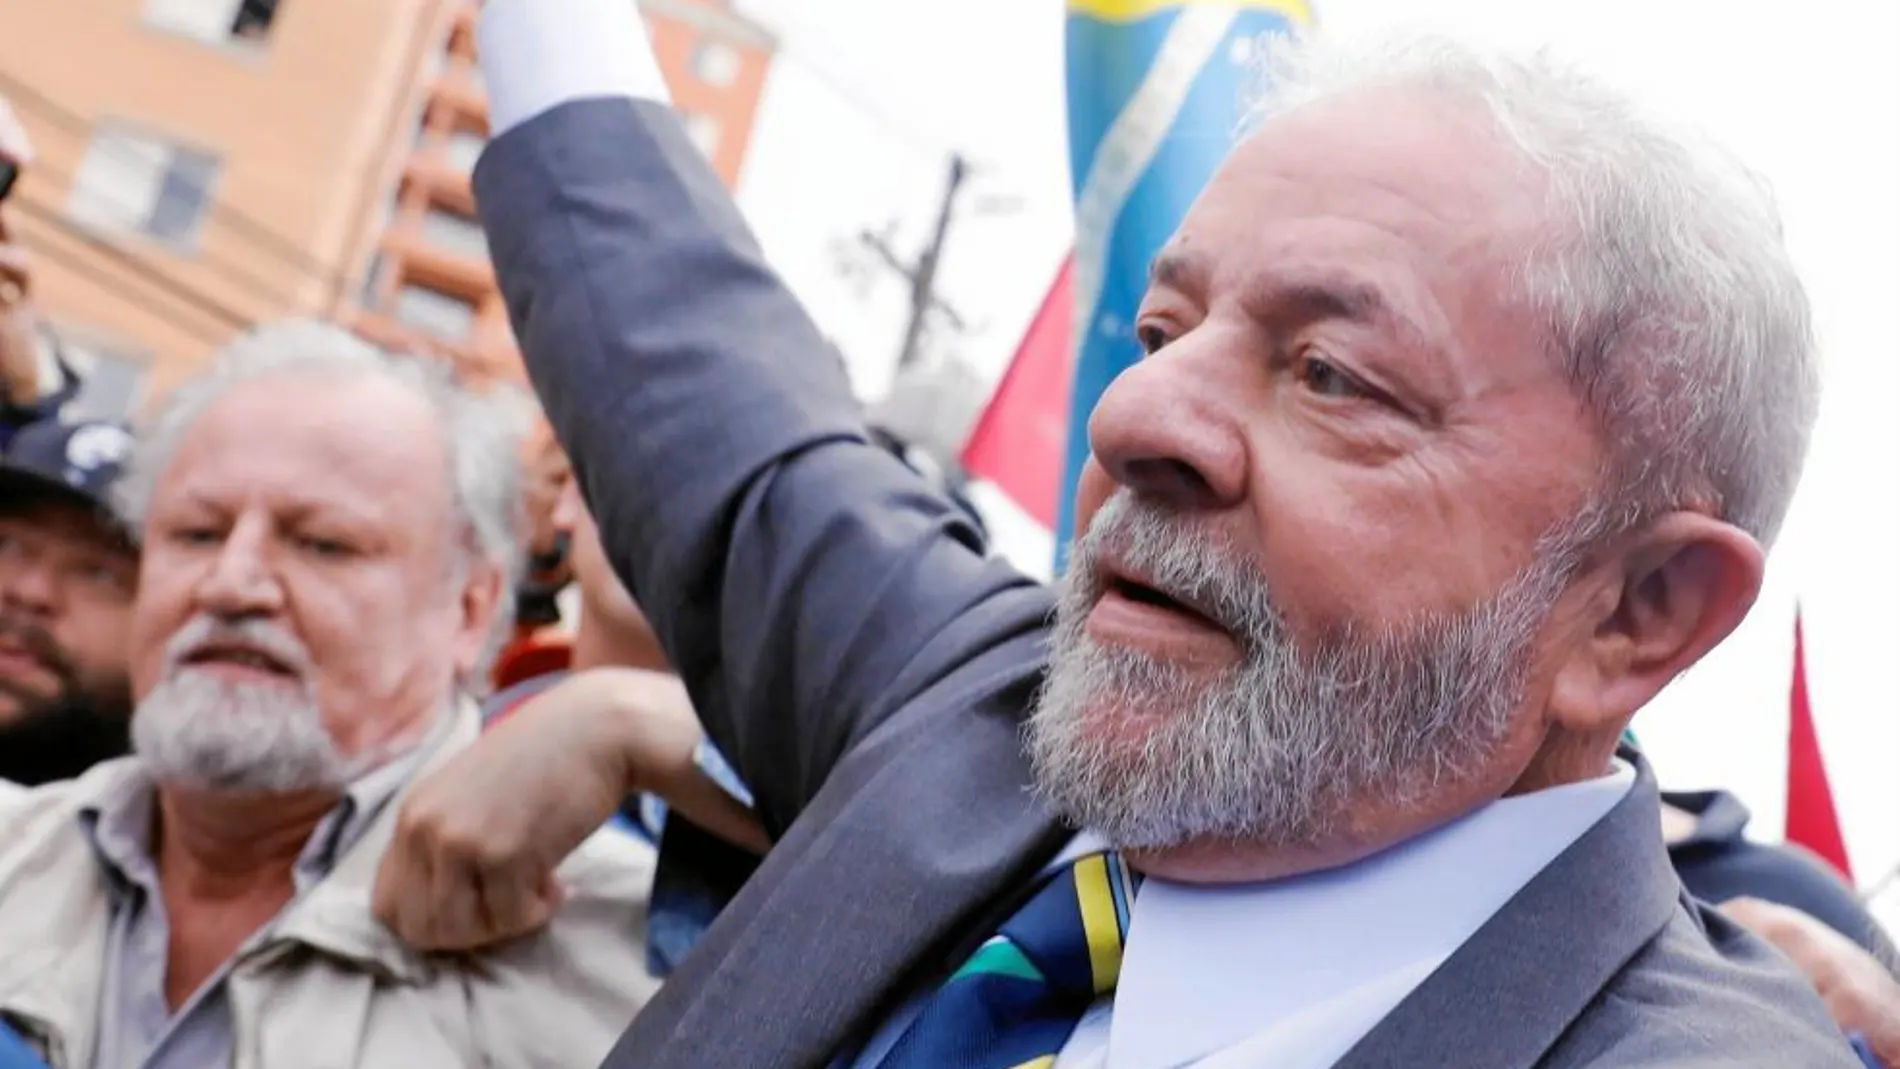 El ex presidente Lula da Silva